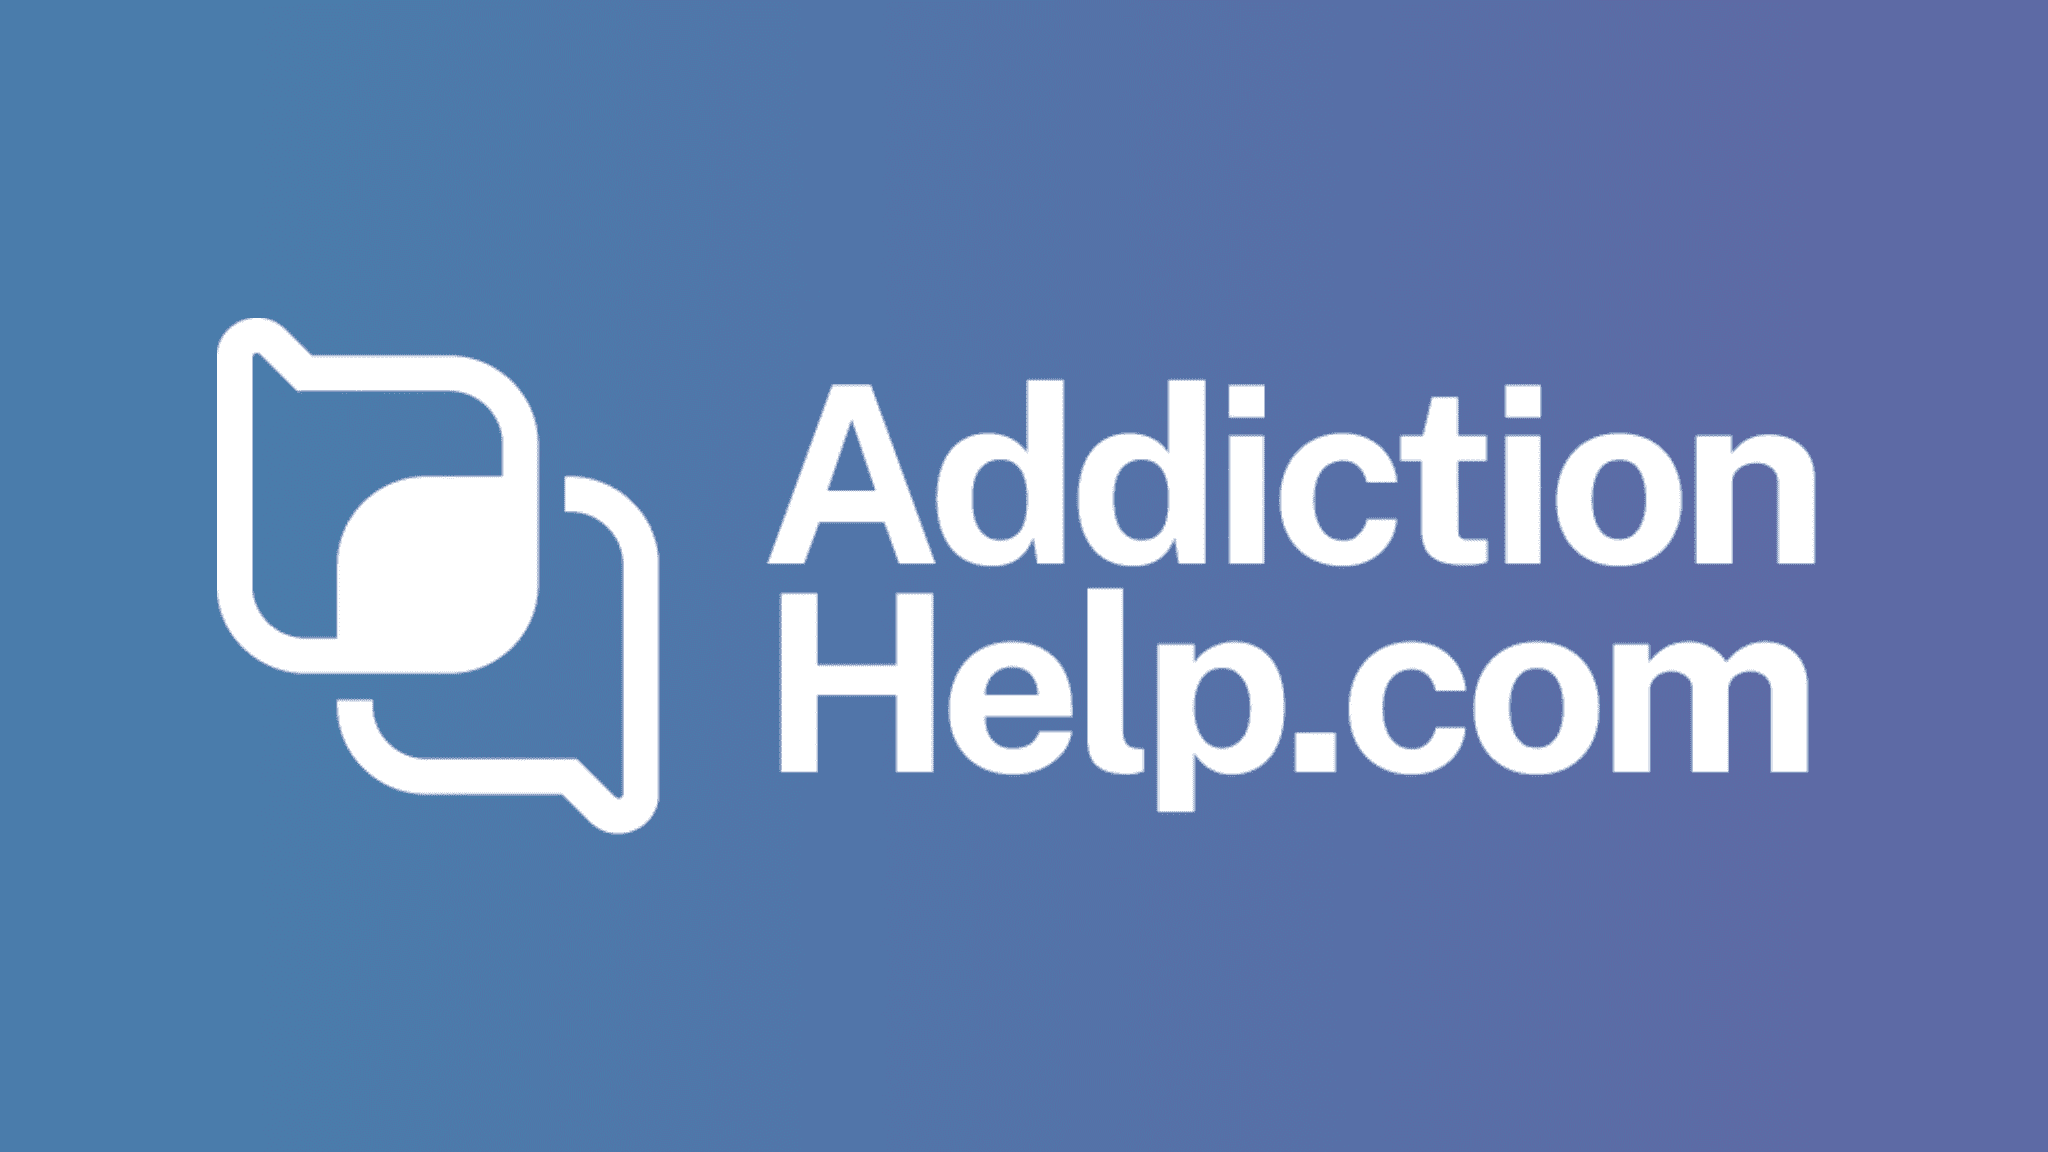 www.addictionhelp.com